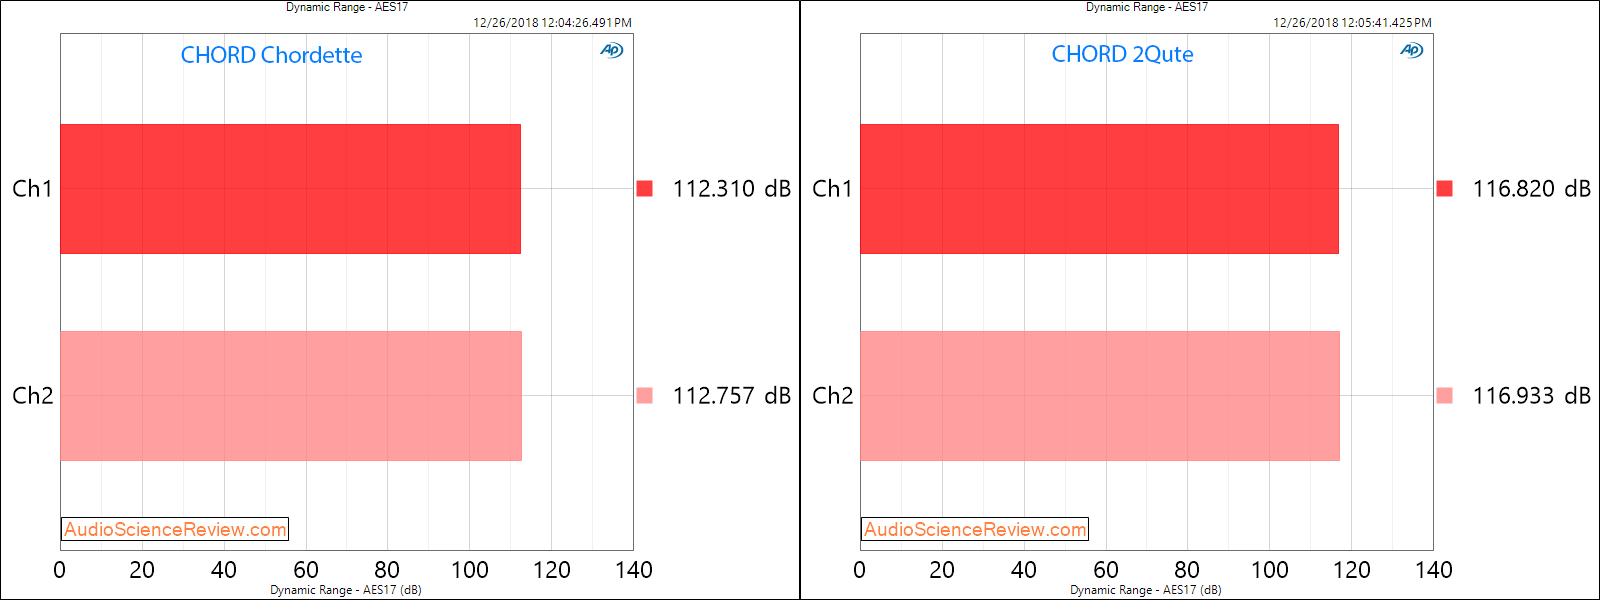 CHORD Chordette and 2Qute DAC Dynamic Range Measurements.png